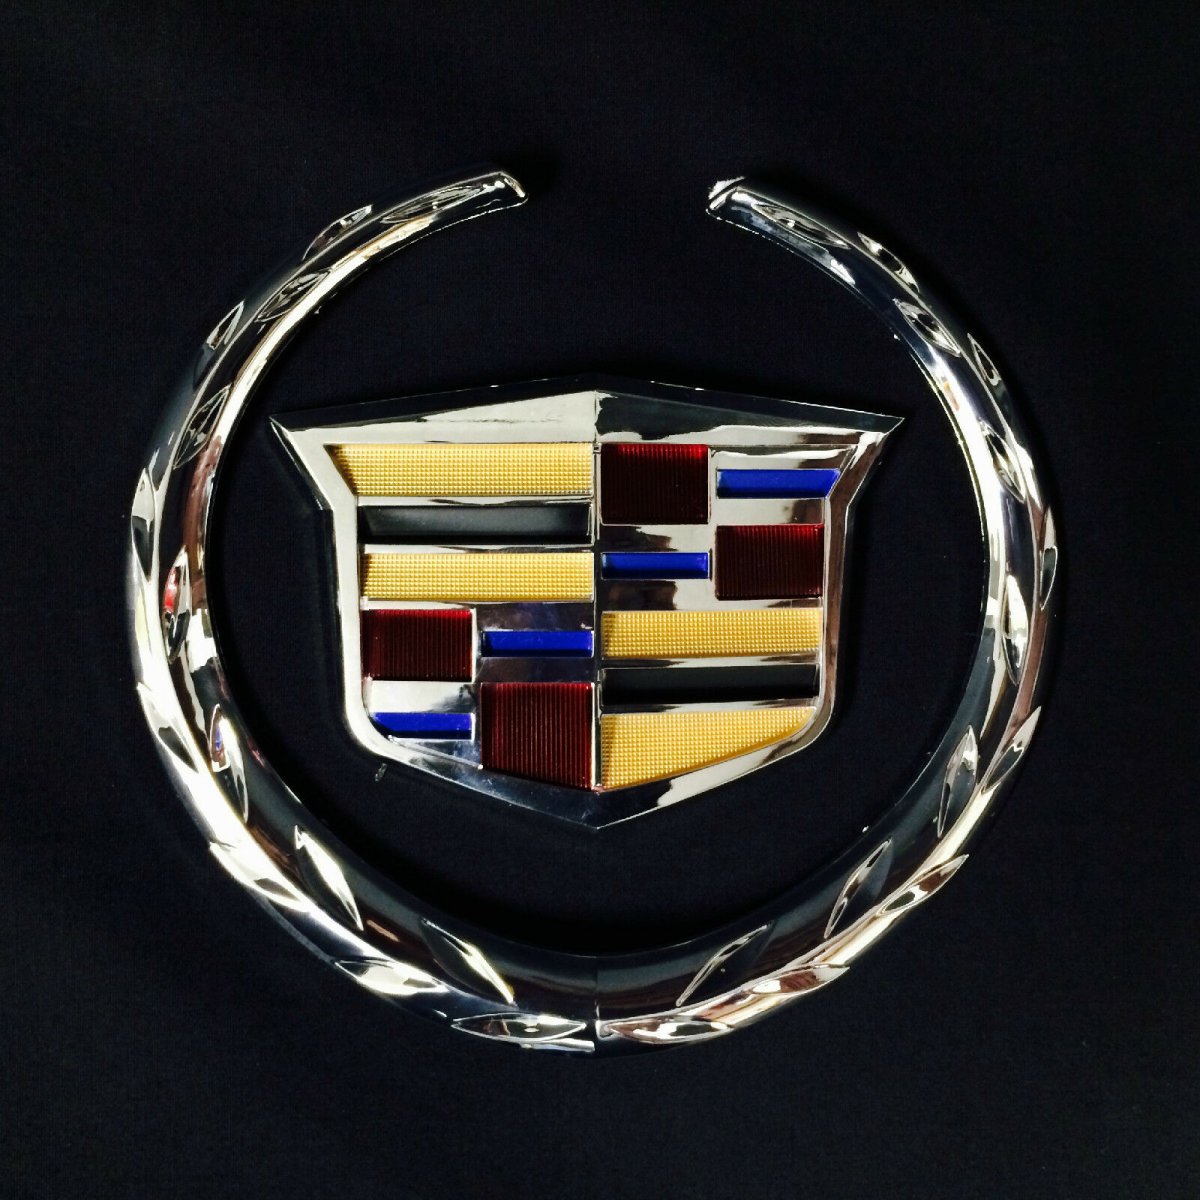 Buick logo 2020